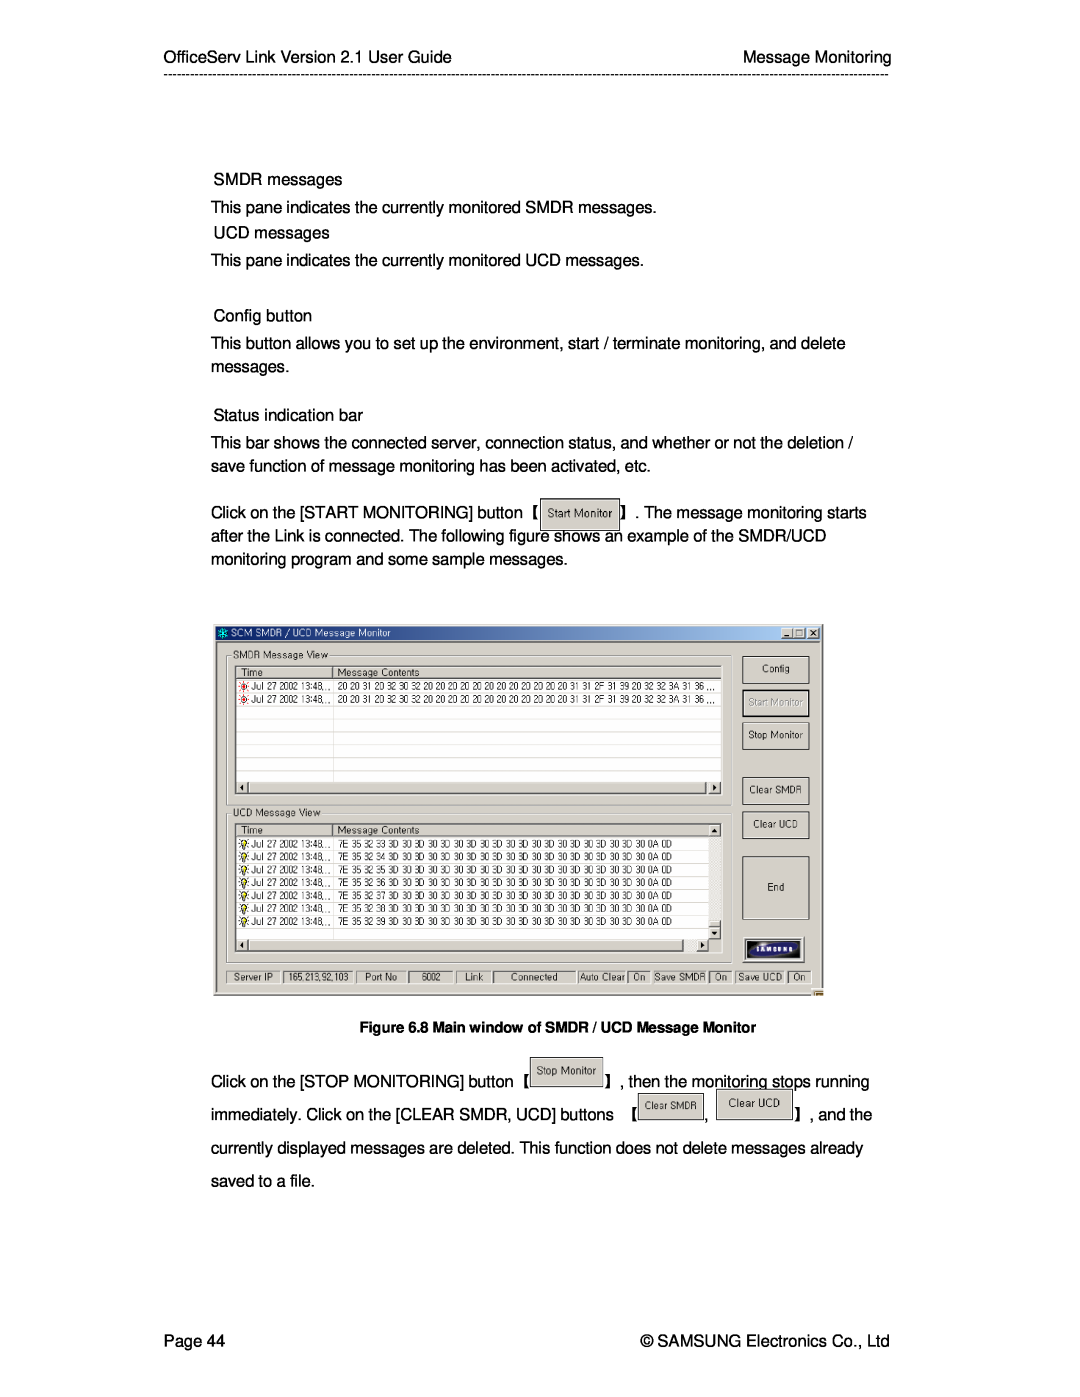 Samsung Version 2.1 manual 8 Main window of SMDR / UCD Message Monitor 